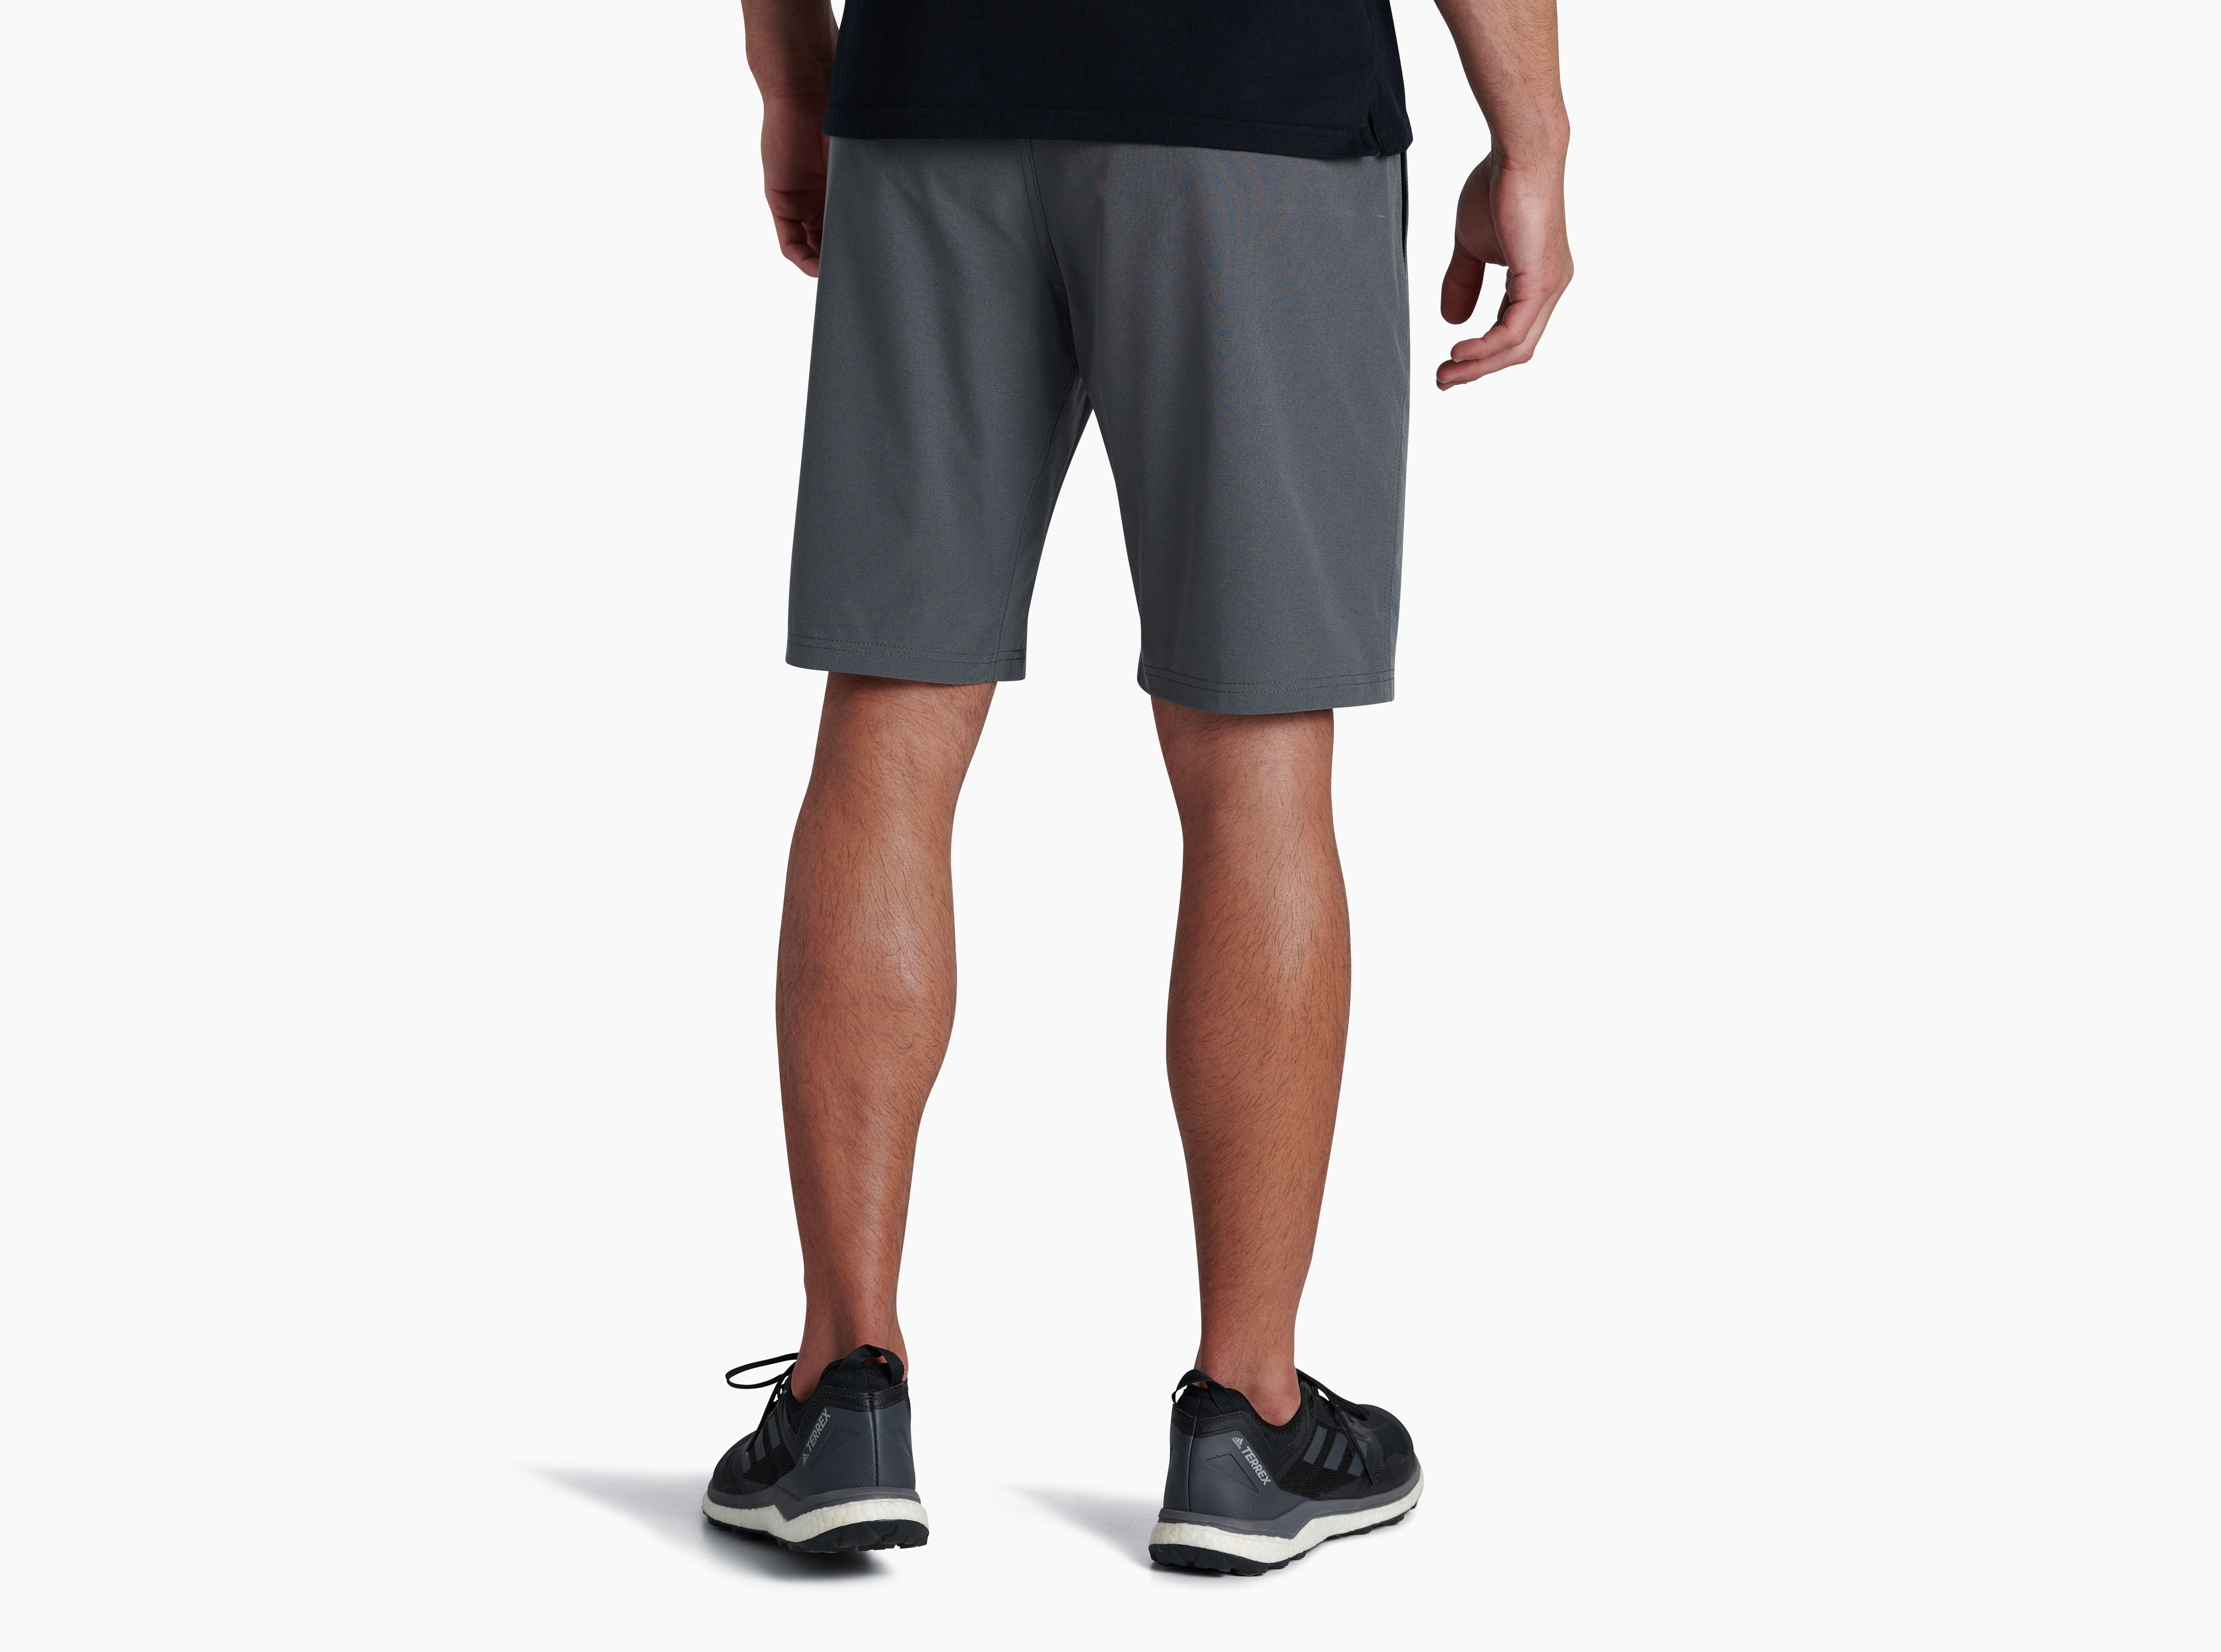 Freeflex™ Short in Men's Shorts